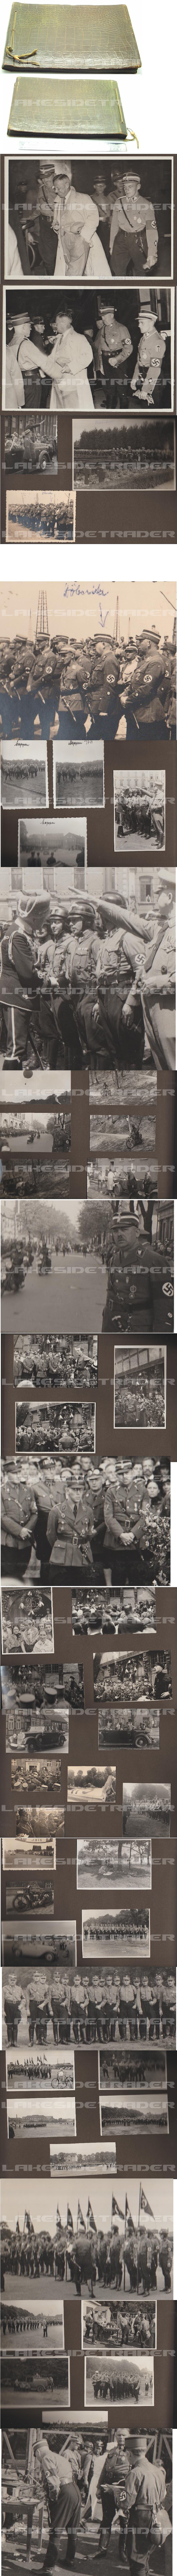 Personal Photo Album of NSKK Brigadefuhrer Uhde